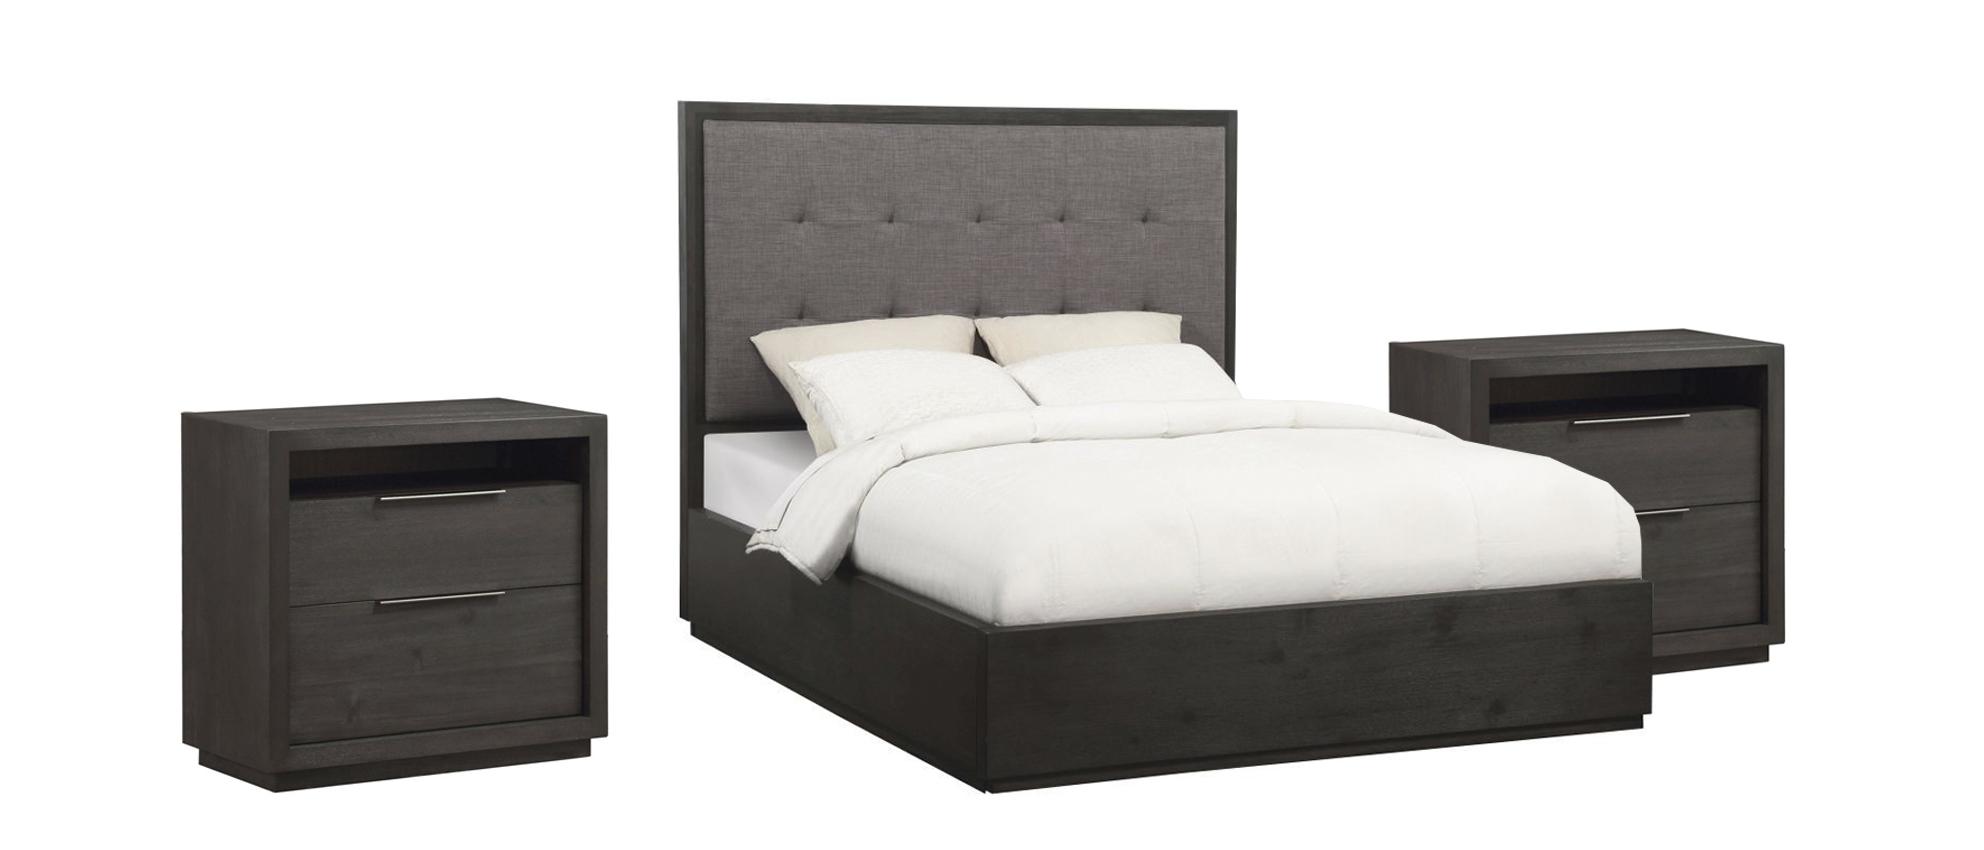 Contemporary Platform Bedroom Set OXFORD AZU5F5D-2N-3PC in Dark Gray Fabric